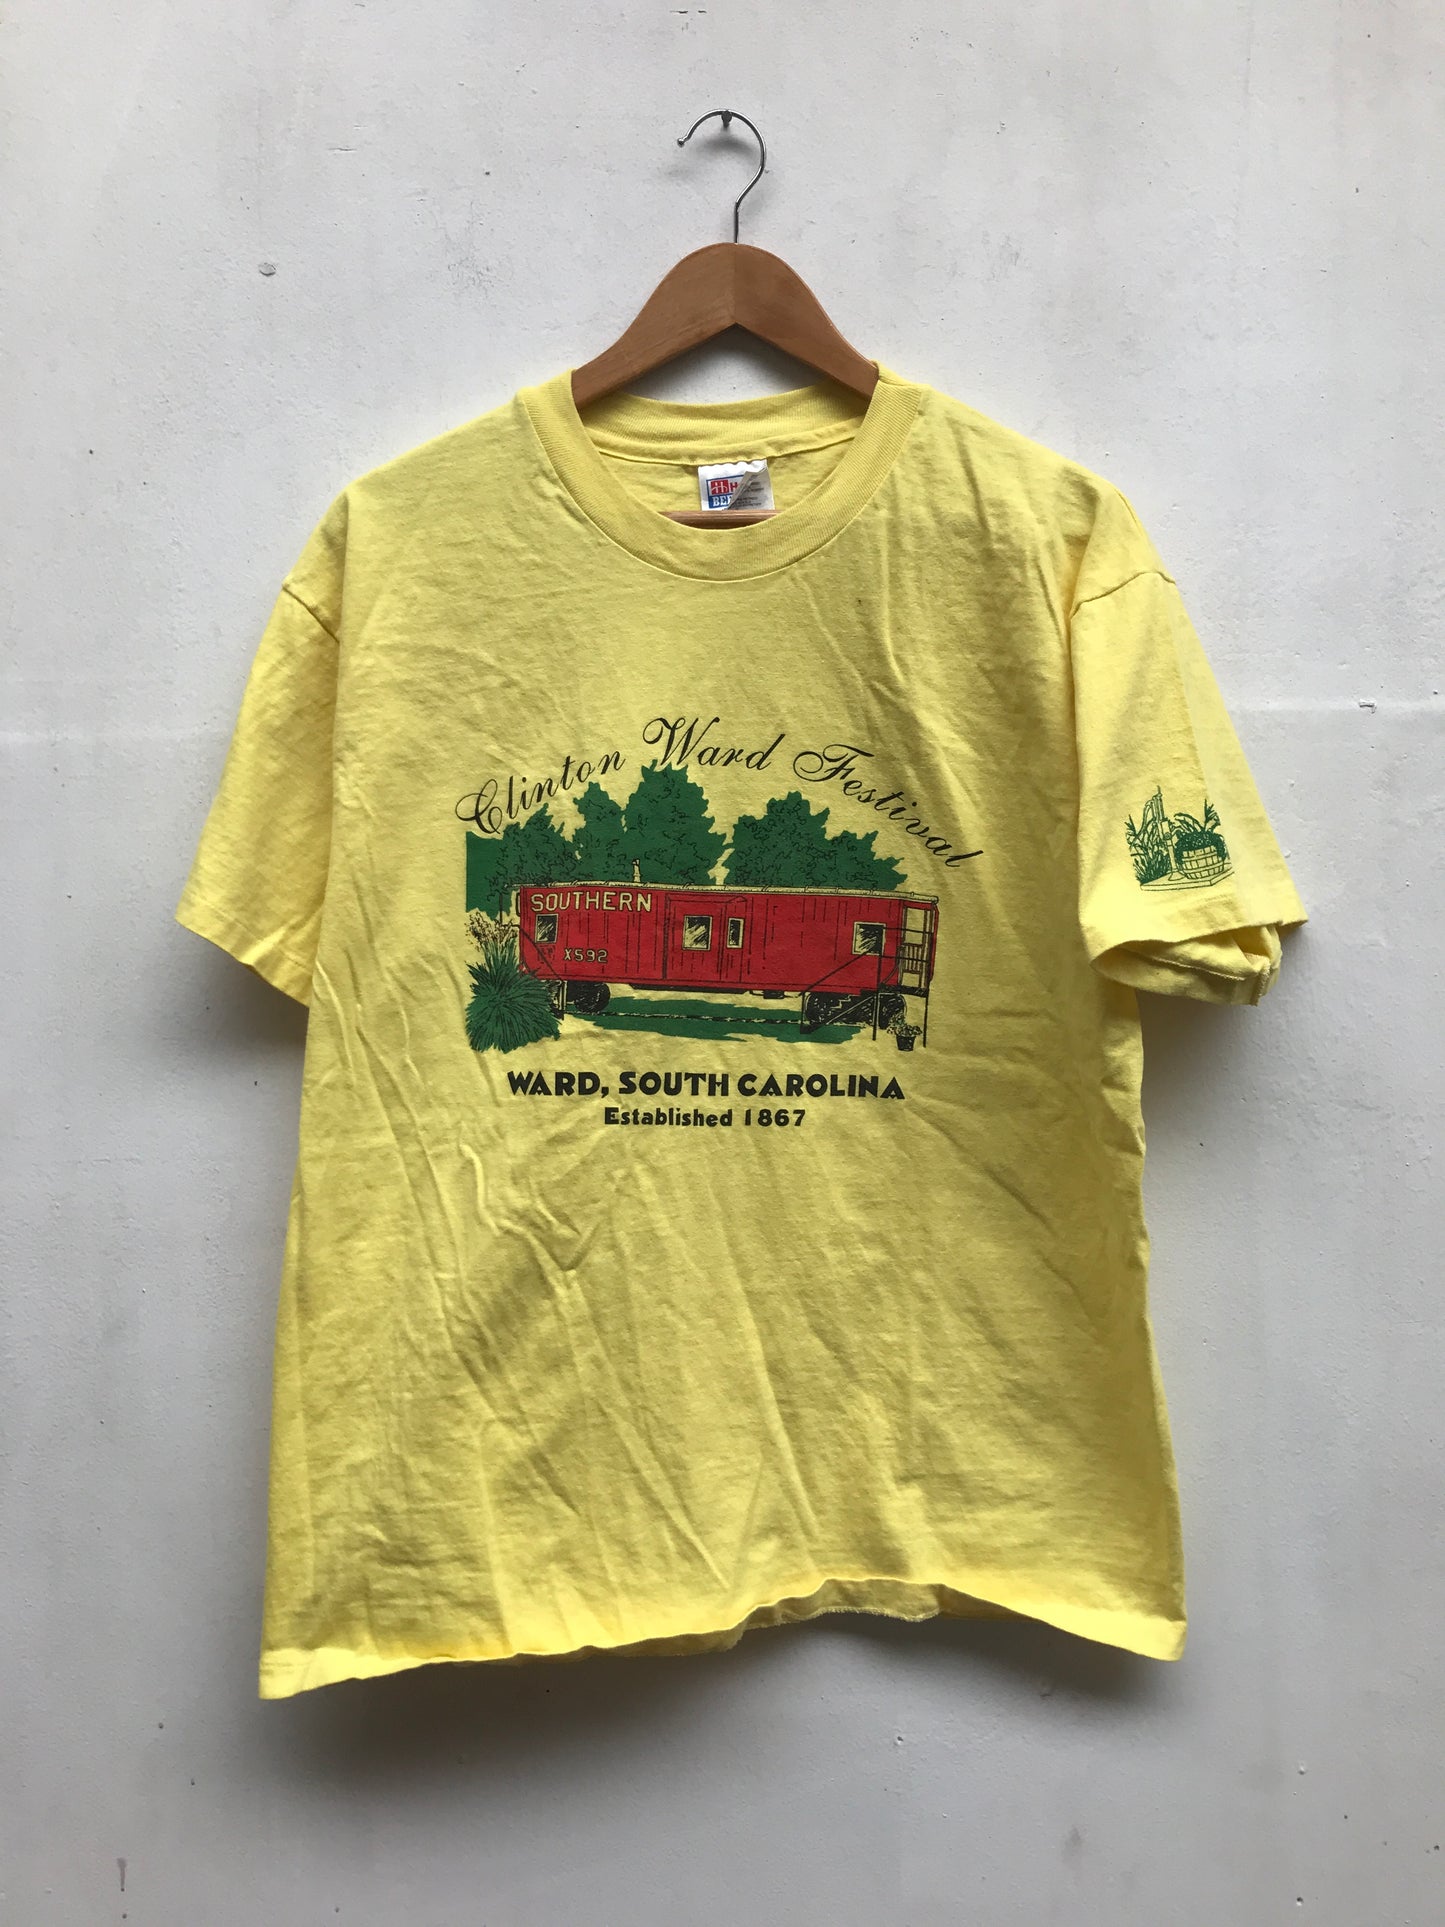 Clinton Ward Festival Vintage T-shirt